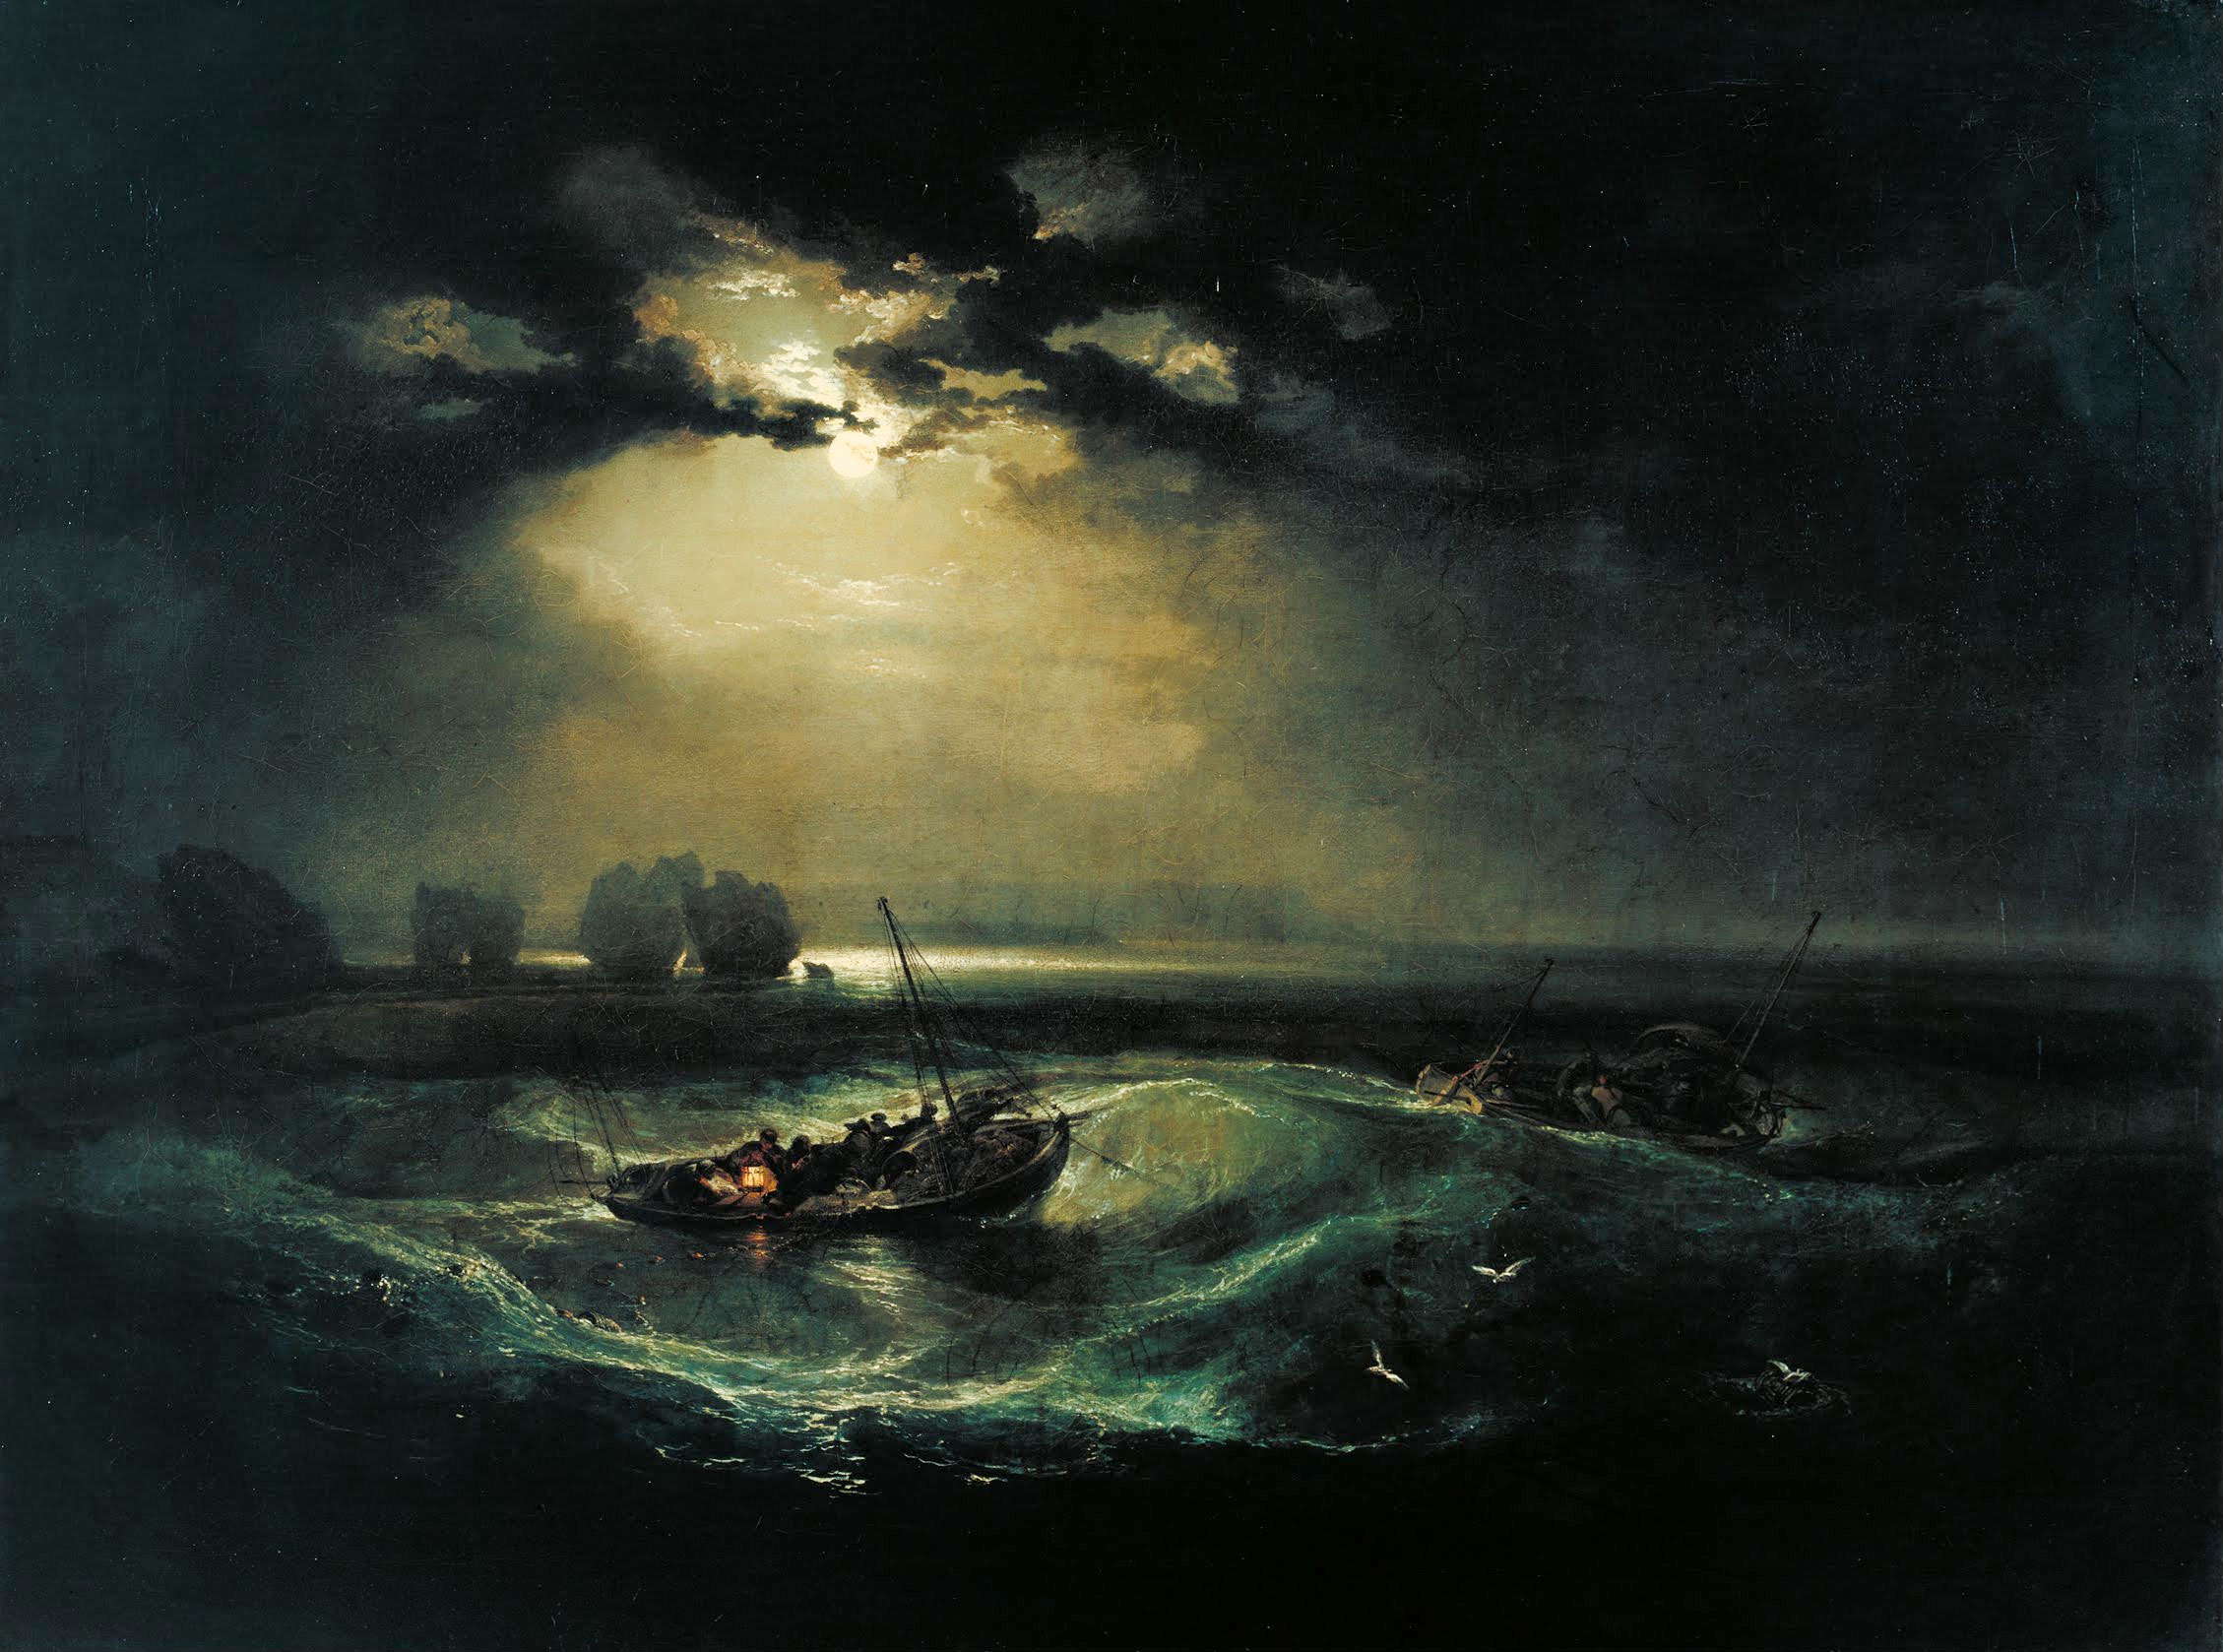 Turner William - Fishermen at Sea